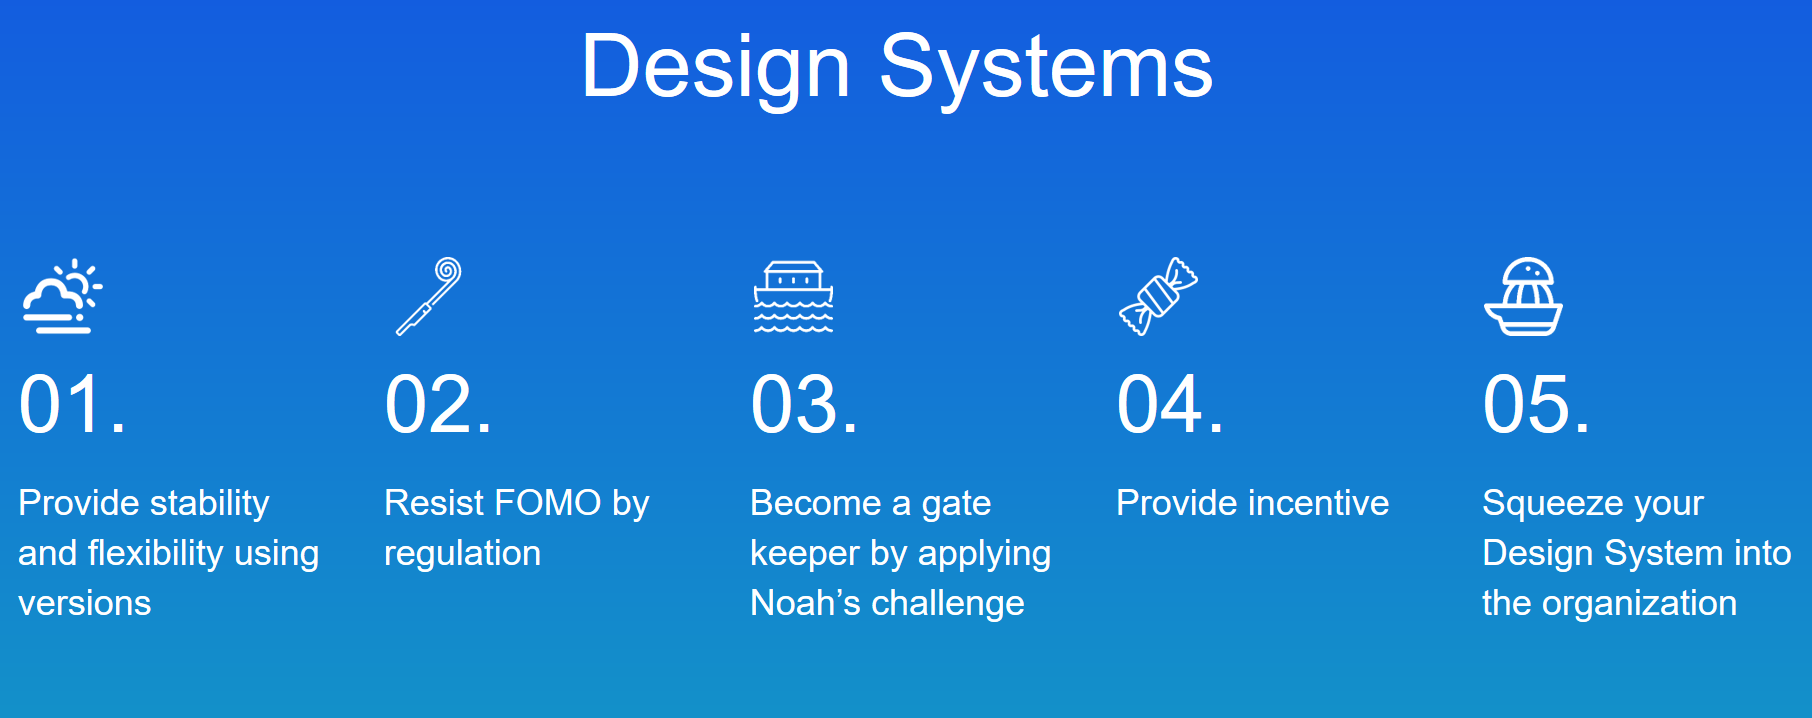 Design System כמוצר